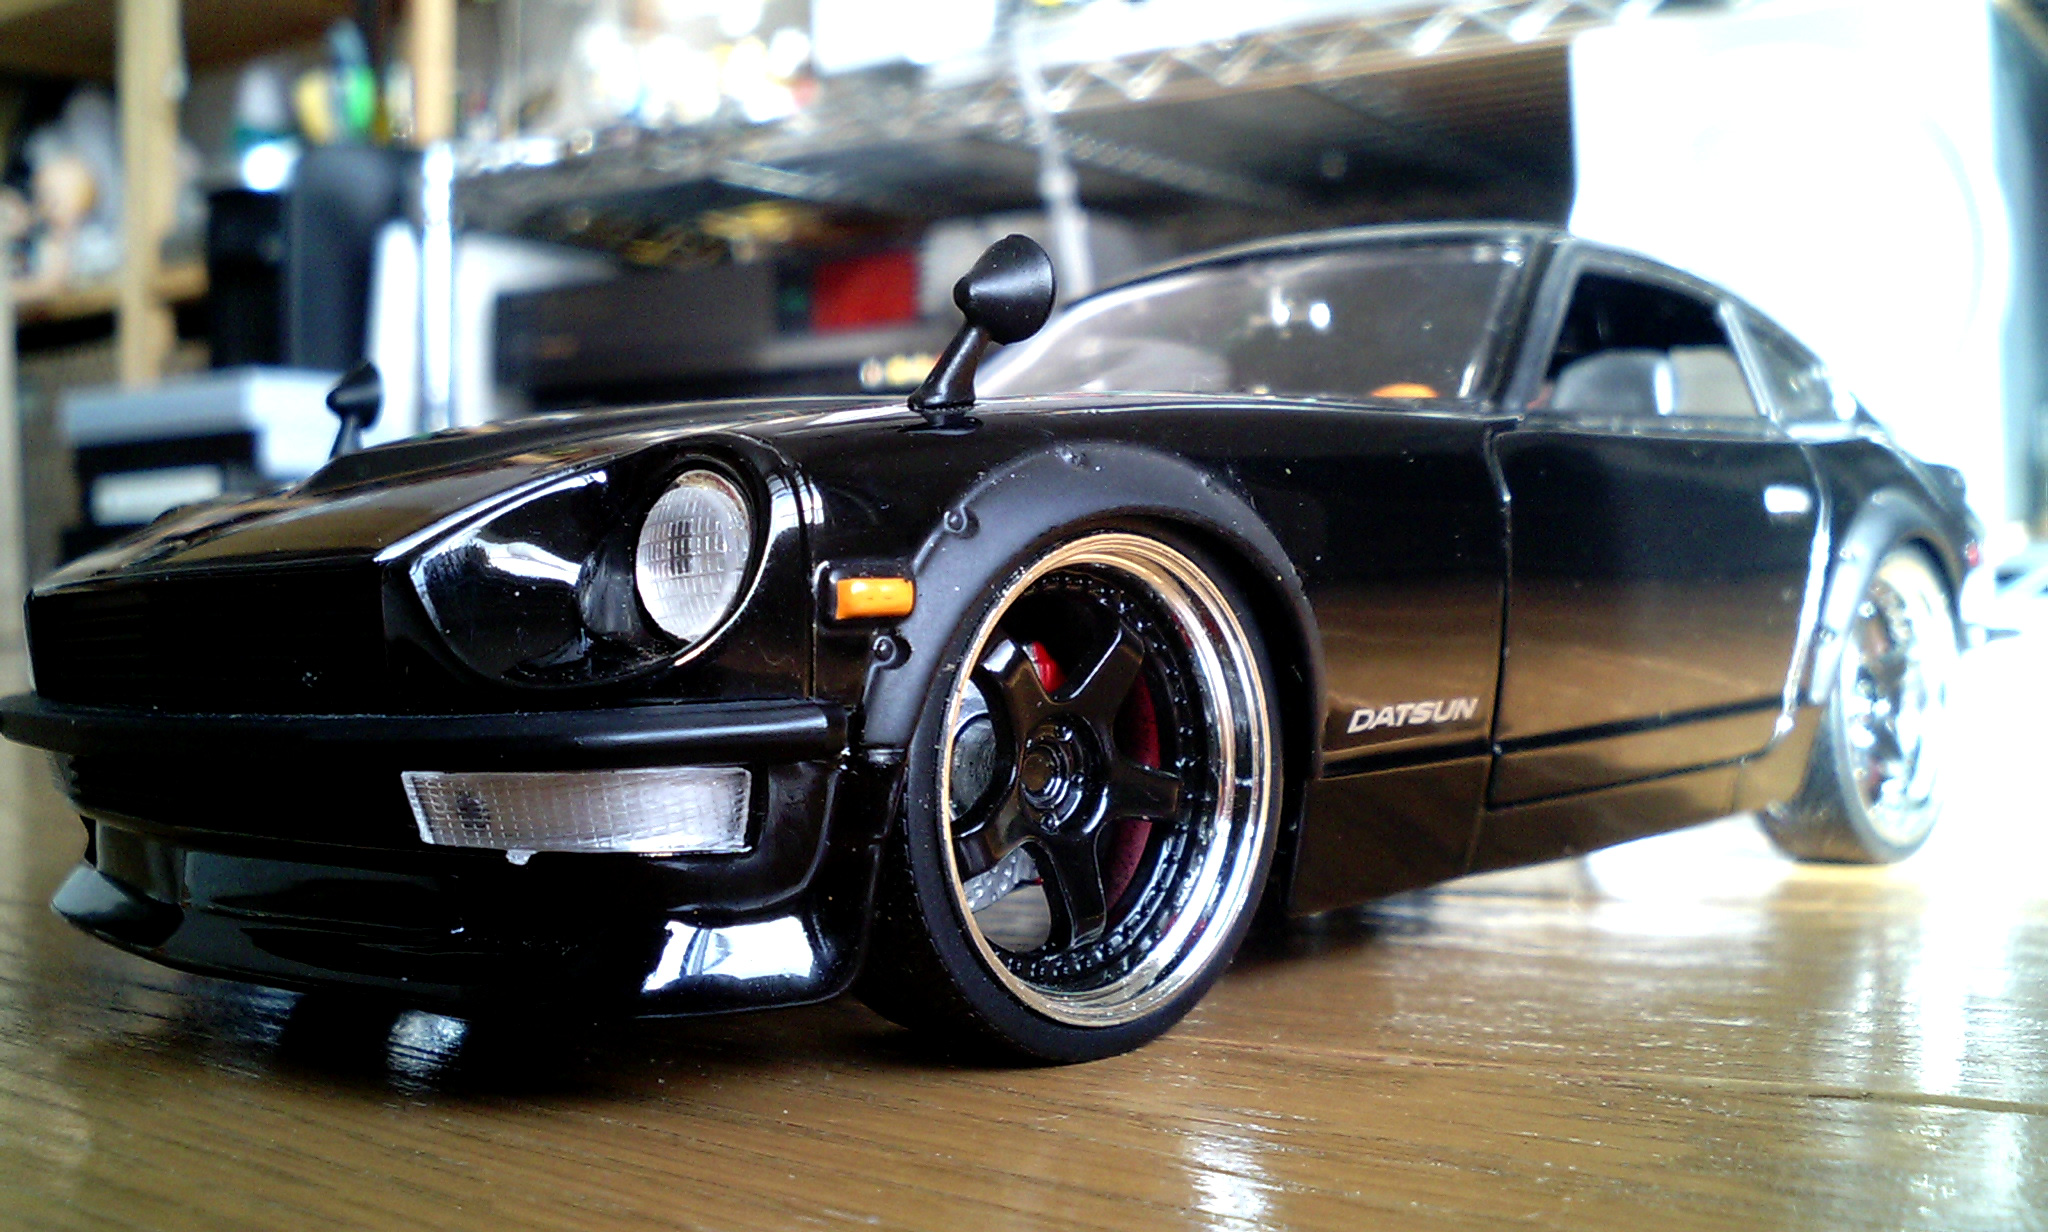 a toy model of a pontiac daytona car